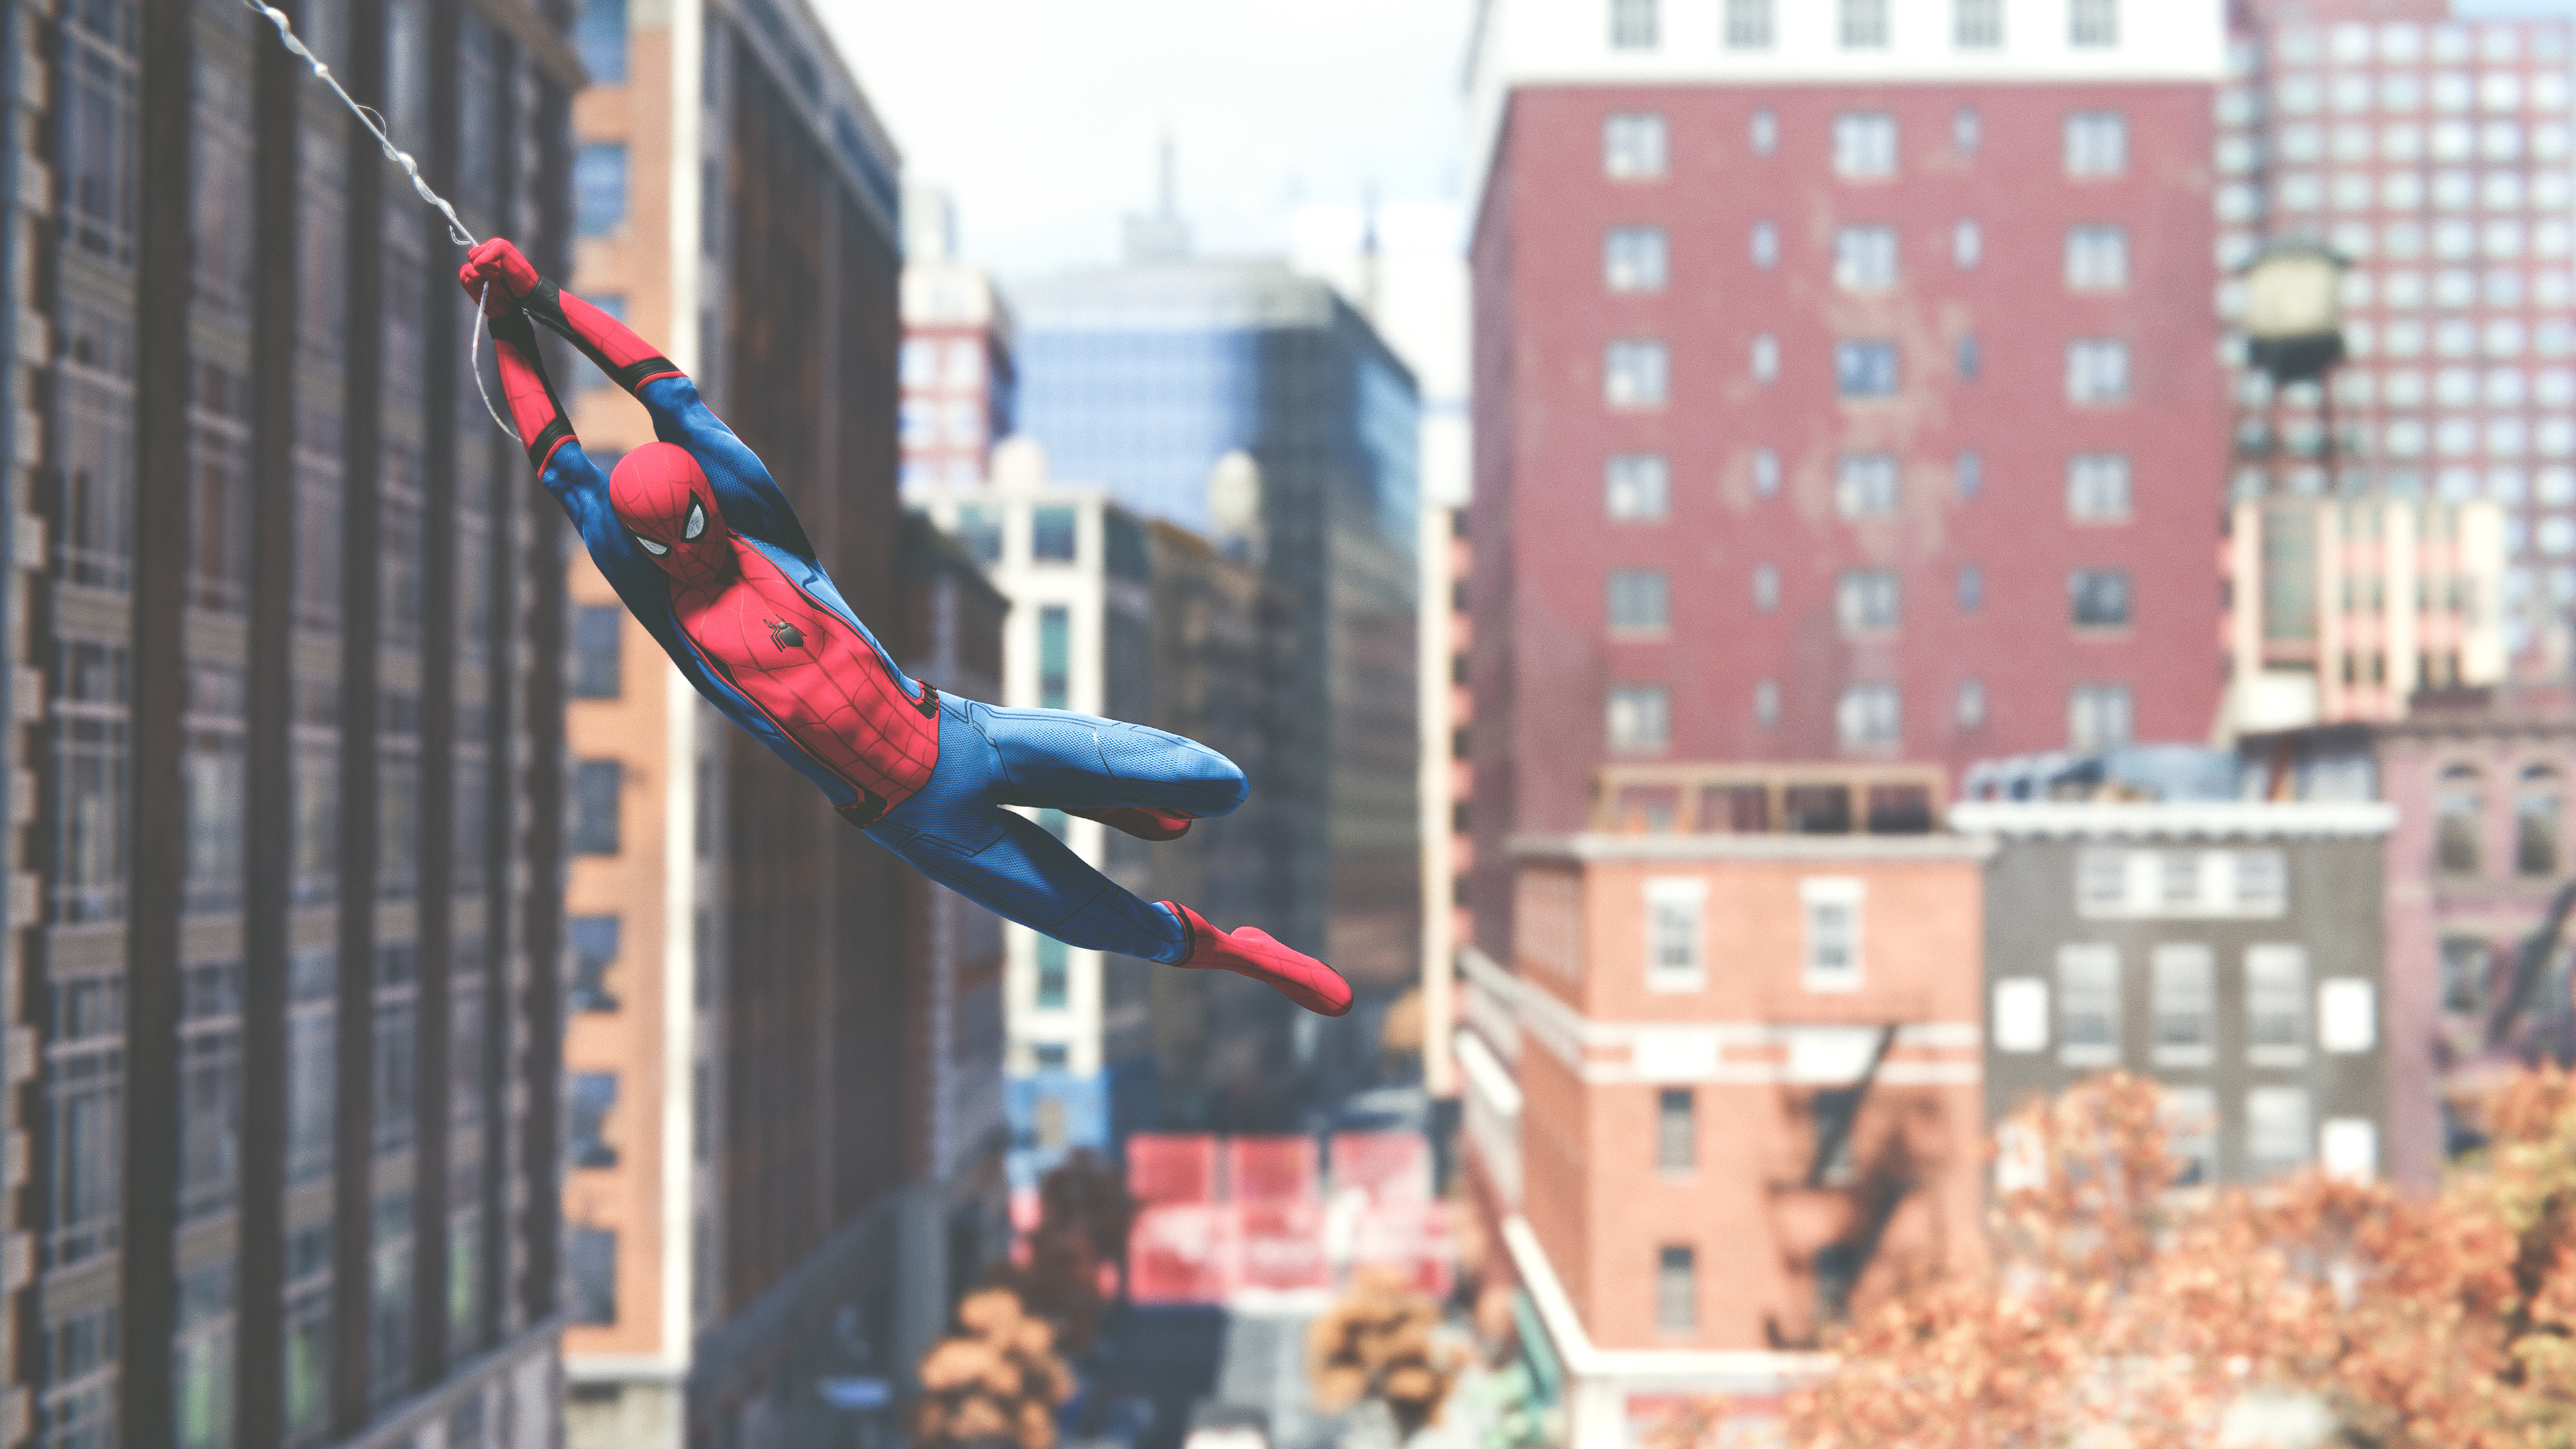 Spider-Man (PS4) 4k Ultra HD Wallpaper